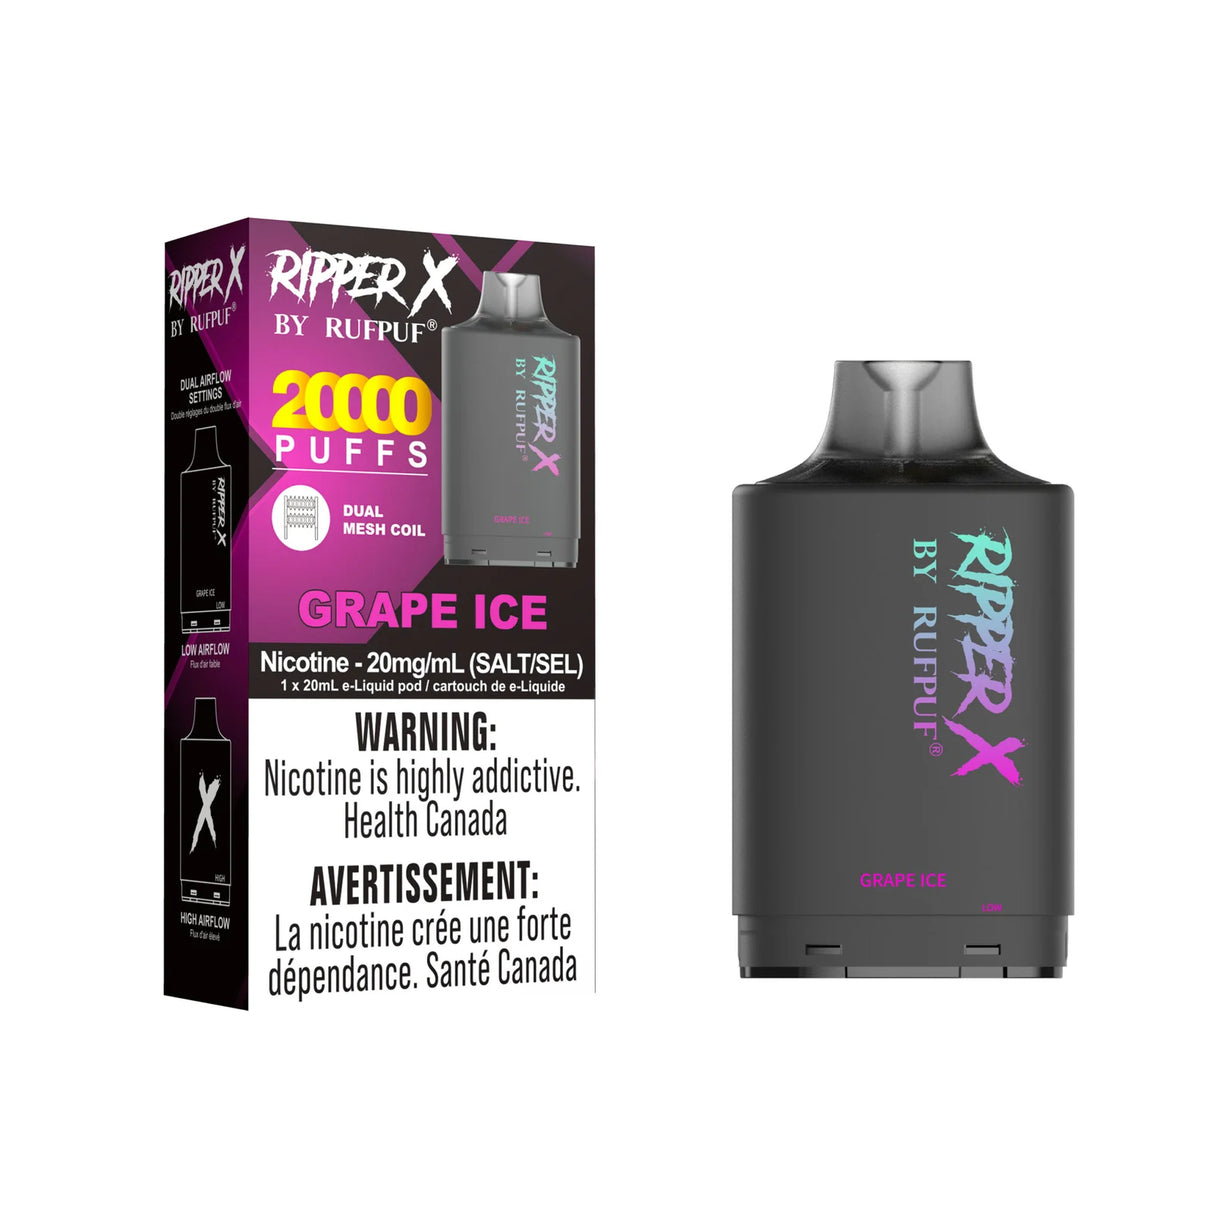 Grape Ice Ripper X 20k